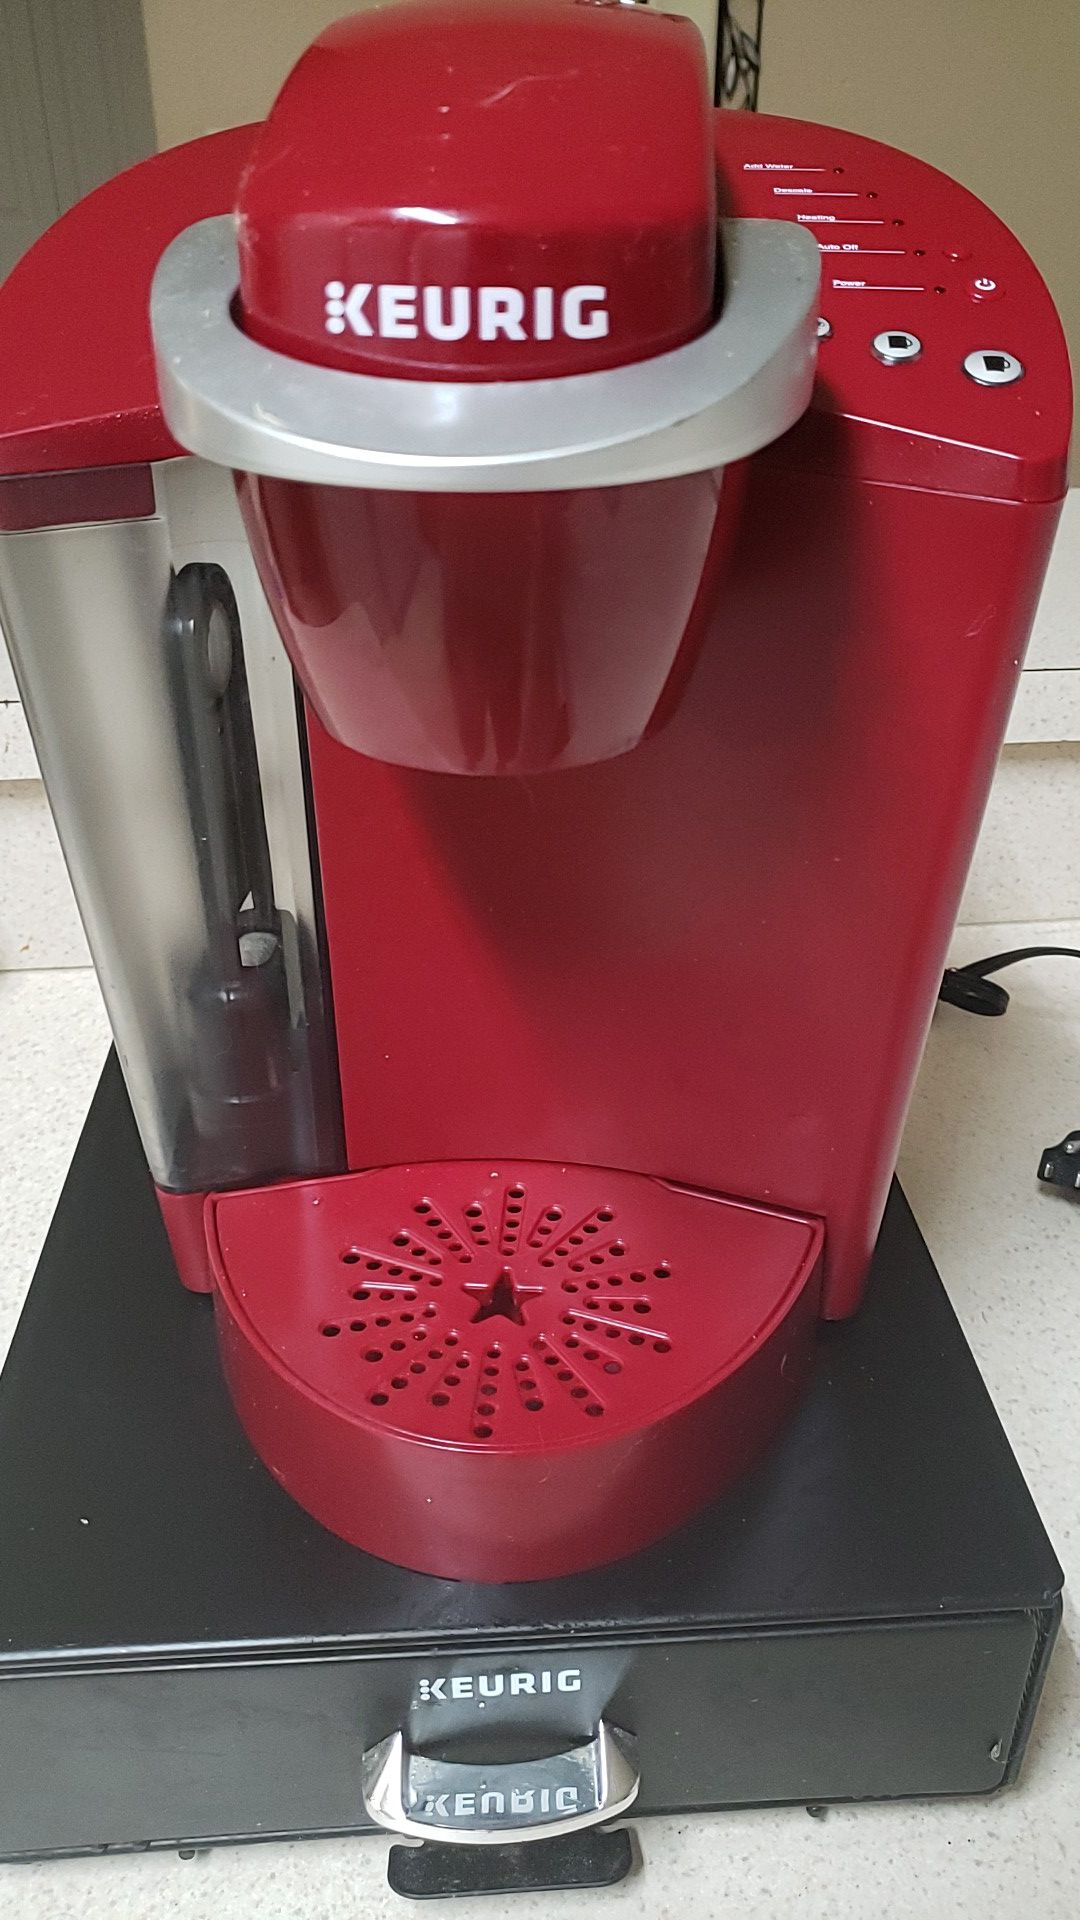 keurig coffee maker as new little use